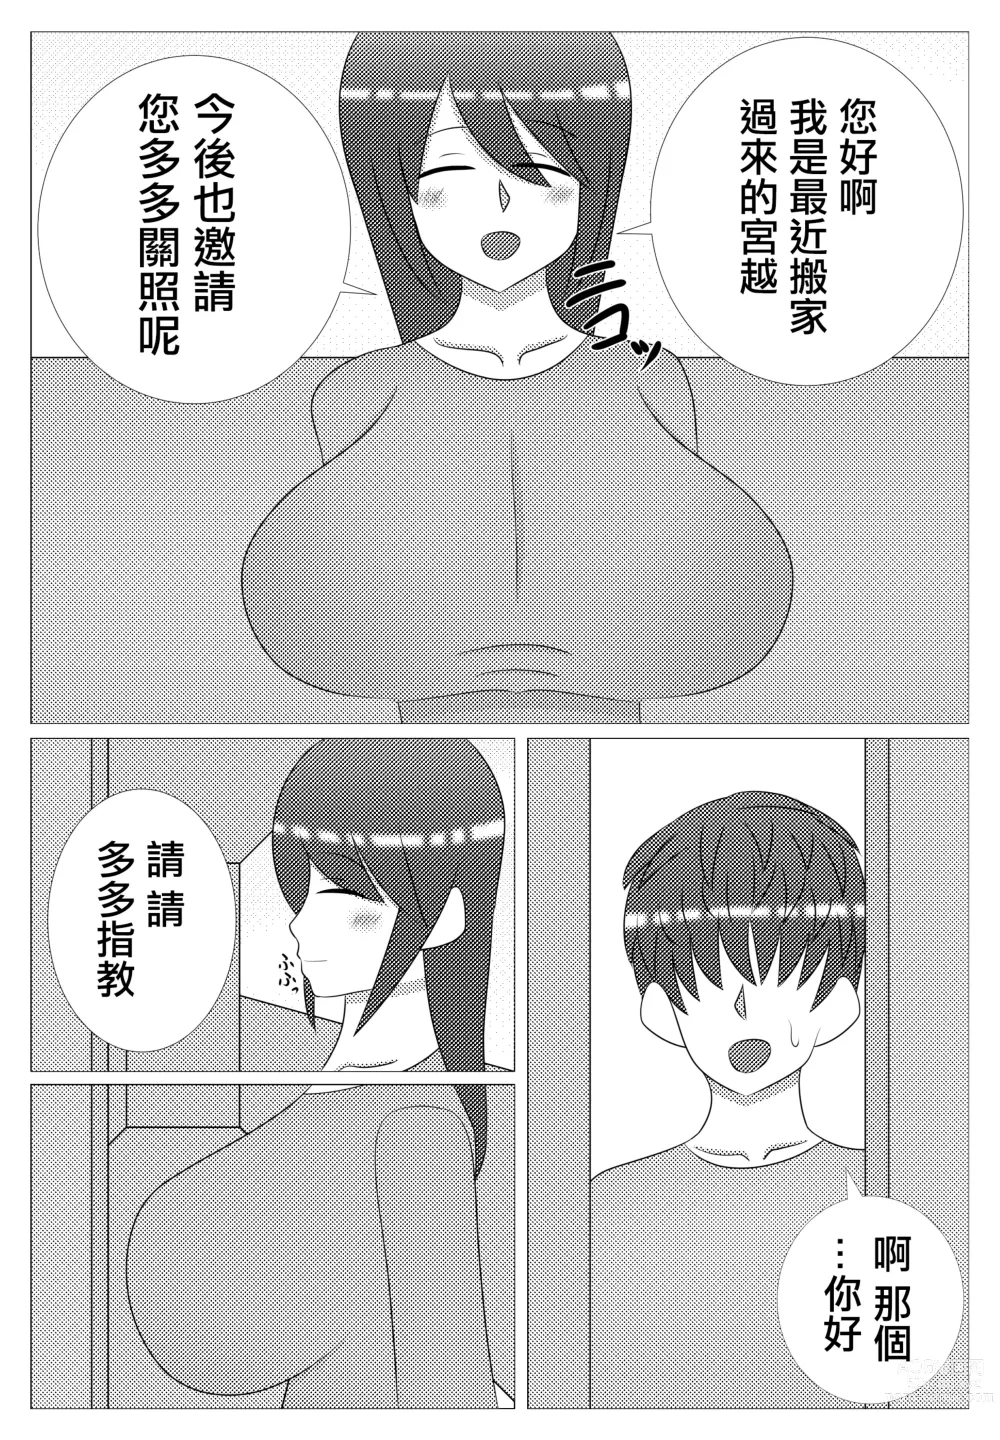 Page 3 of doujinshi 隔壁年輕太太真好搞定